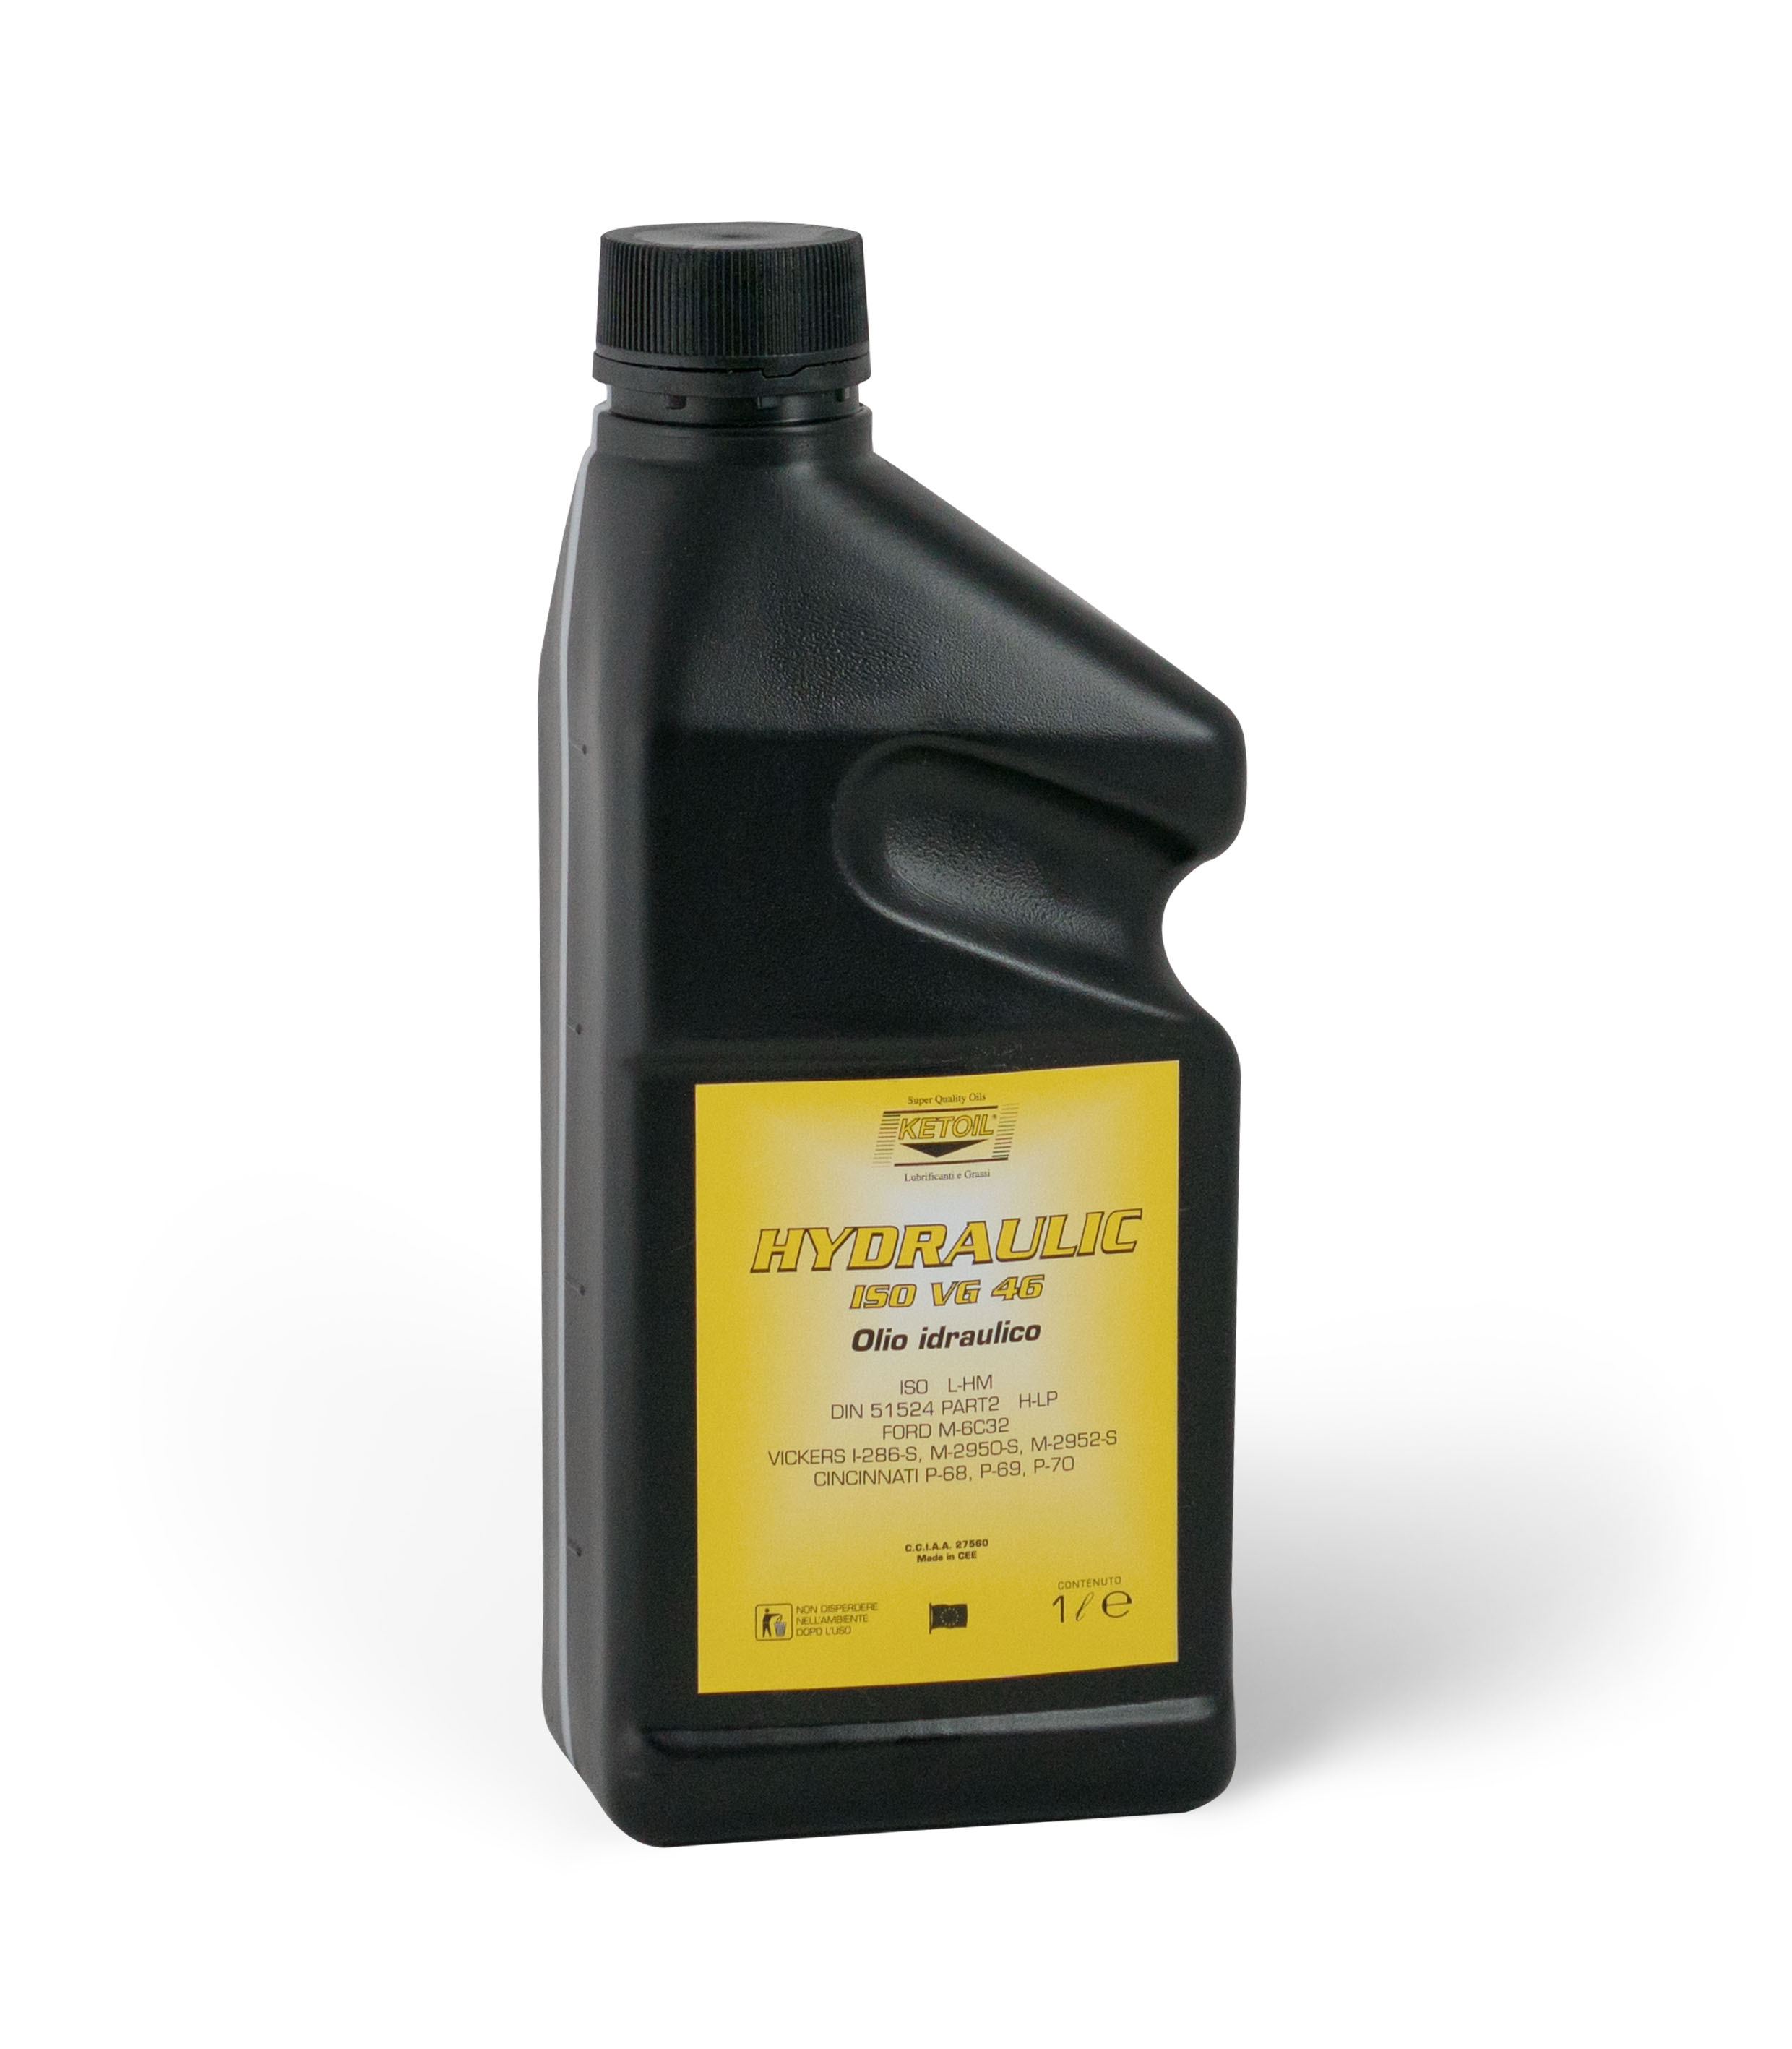 Ketoil Hydraulic oil iso vg 46 - Ketoil